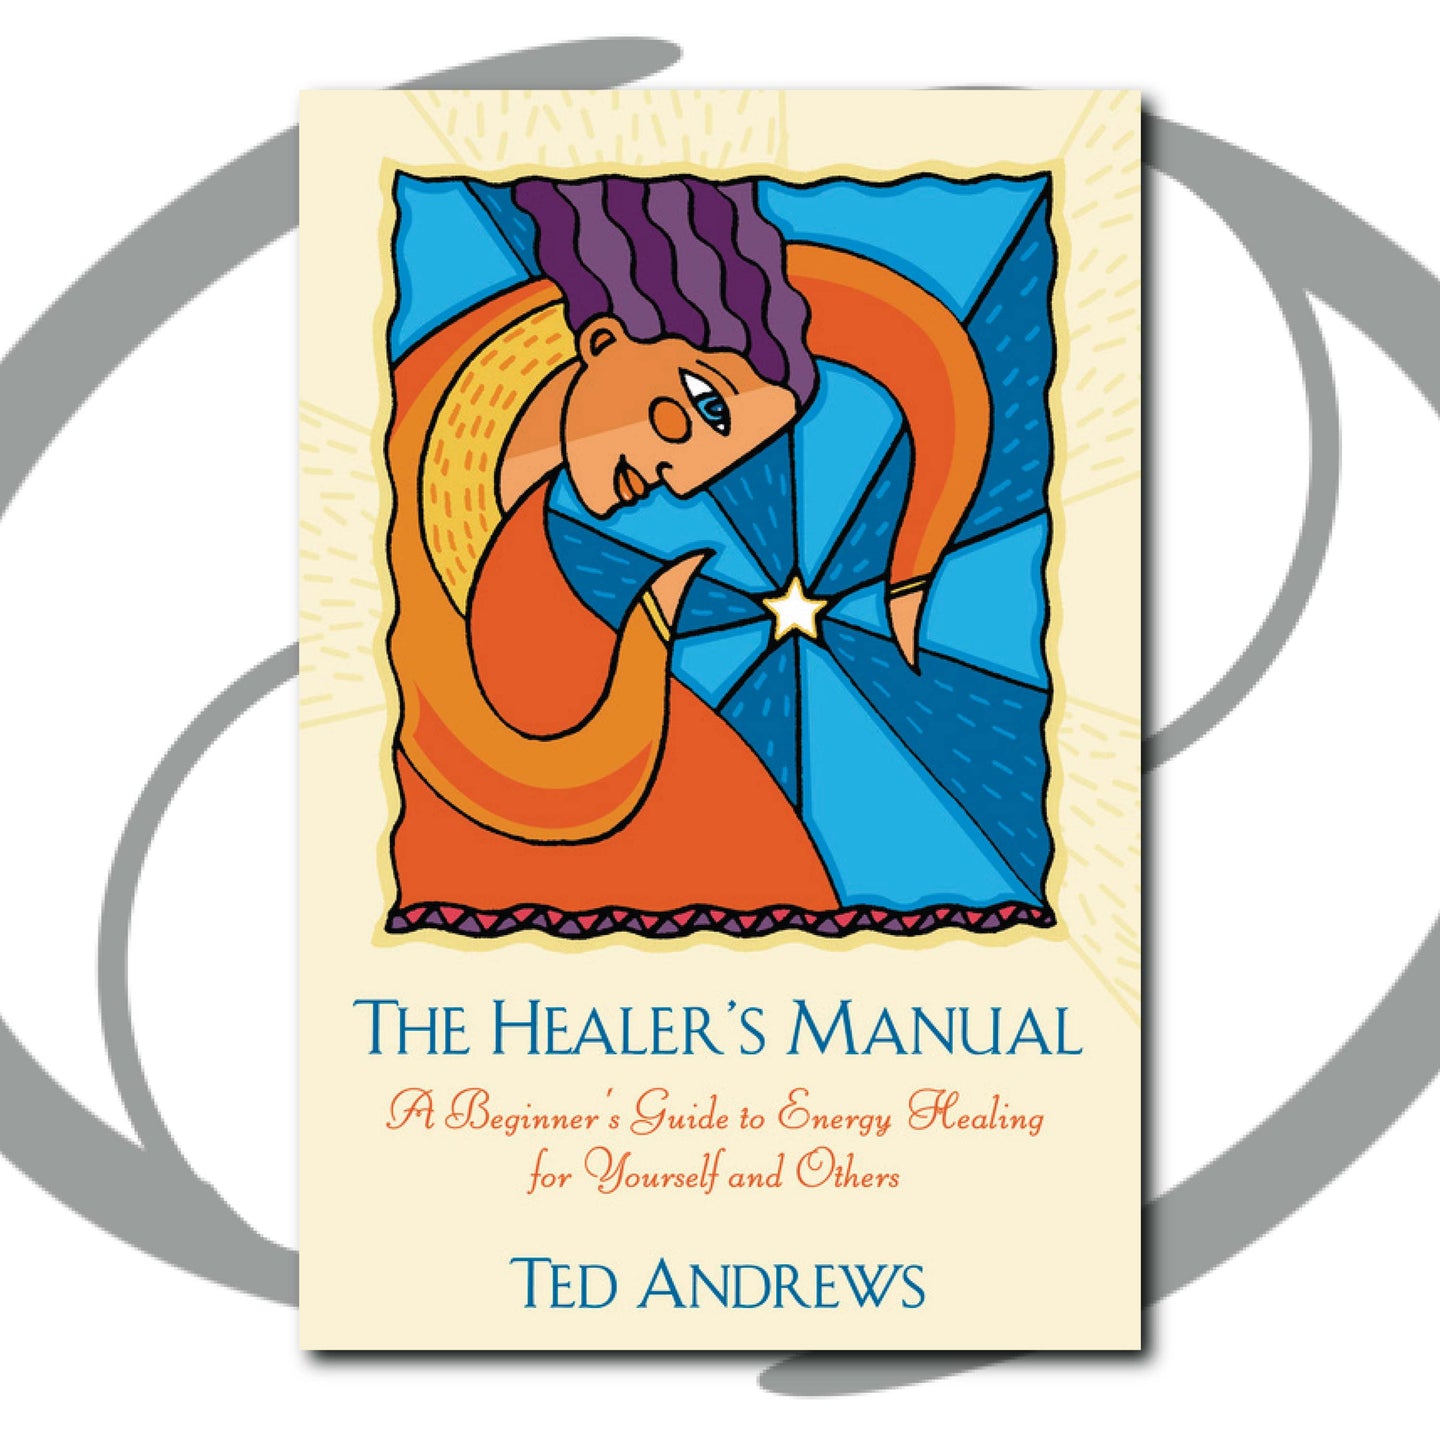 The Healer's Manual